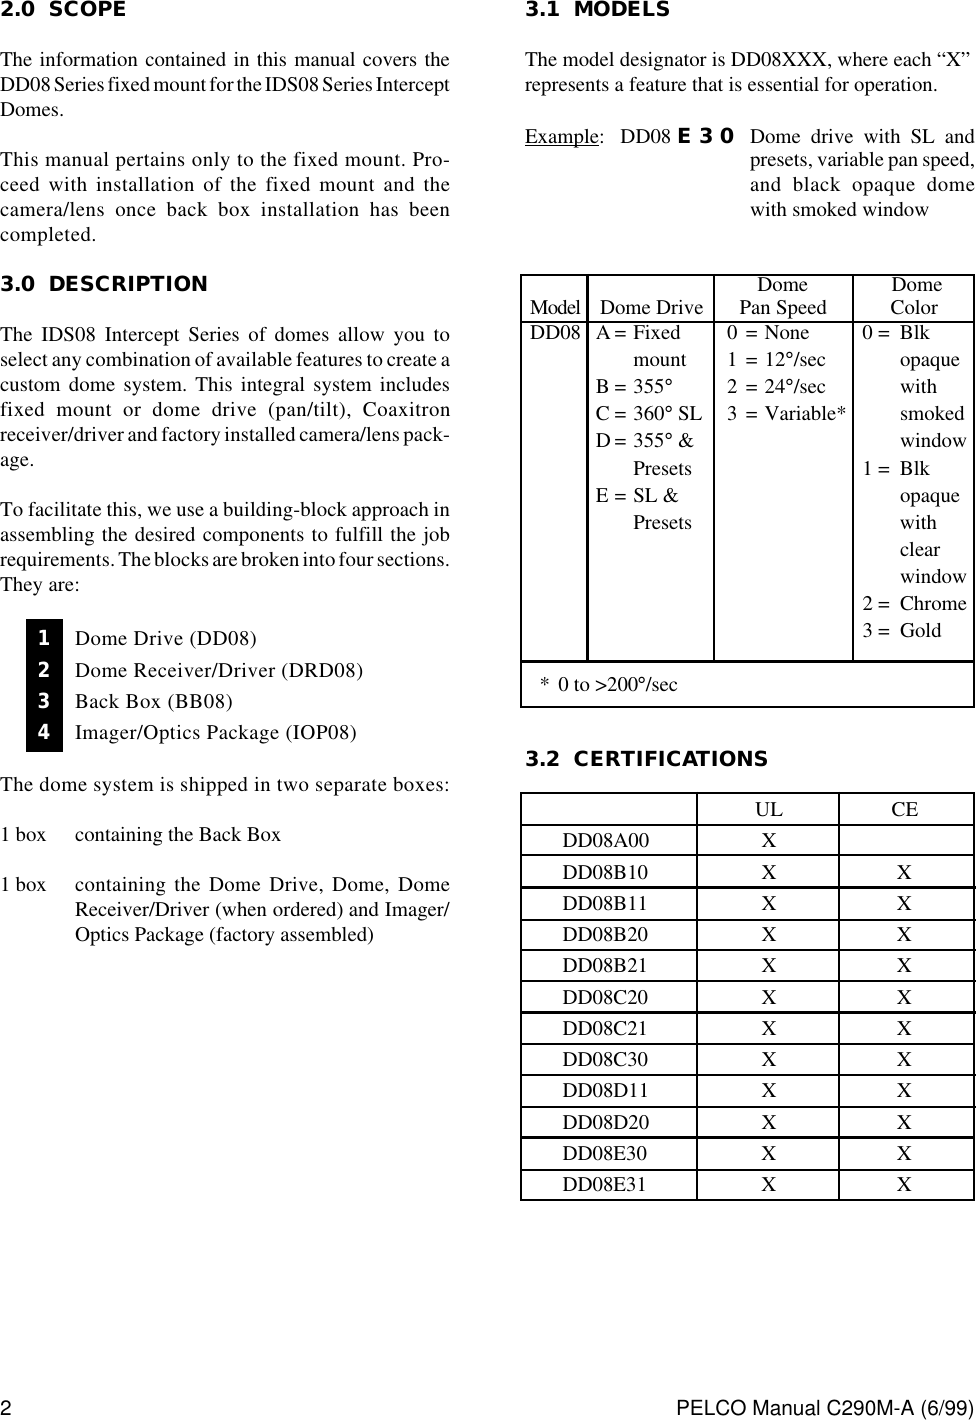 Page 4 of 12 - Pelco Pelco-Dd08-Intercept-Dome-C290M-A-6-99-Users-Manual- DD08 Intercept Dome Series Fixed Mount_manual  Pelco-dd08-intercept-dome-c290m-a-6-99-users-manual